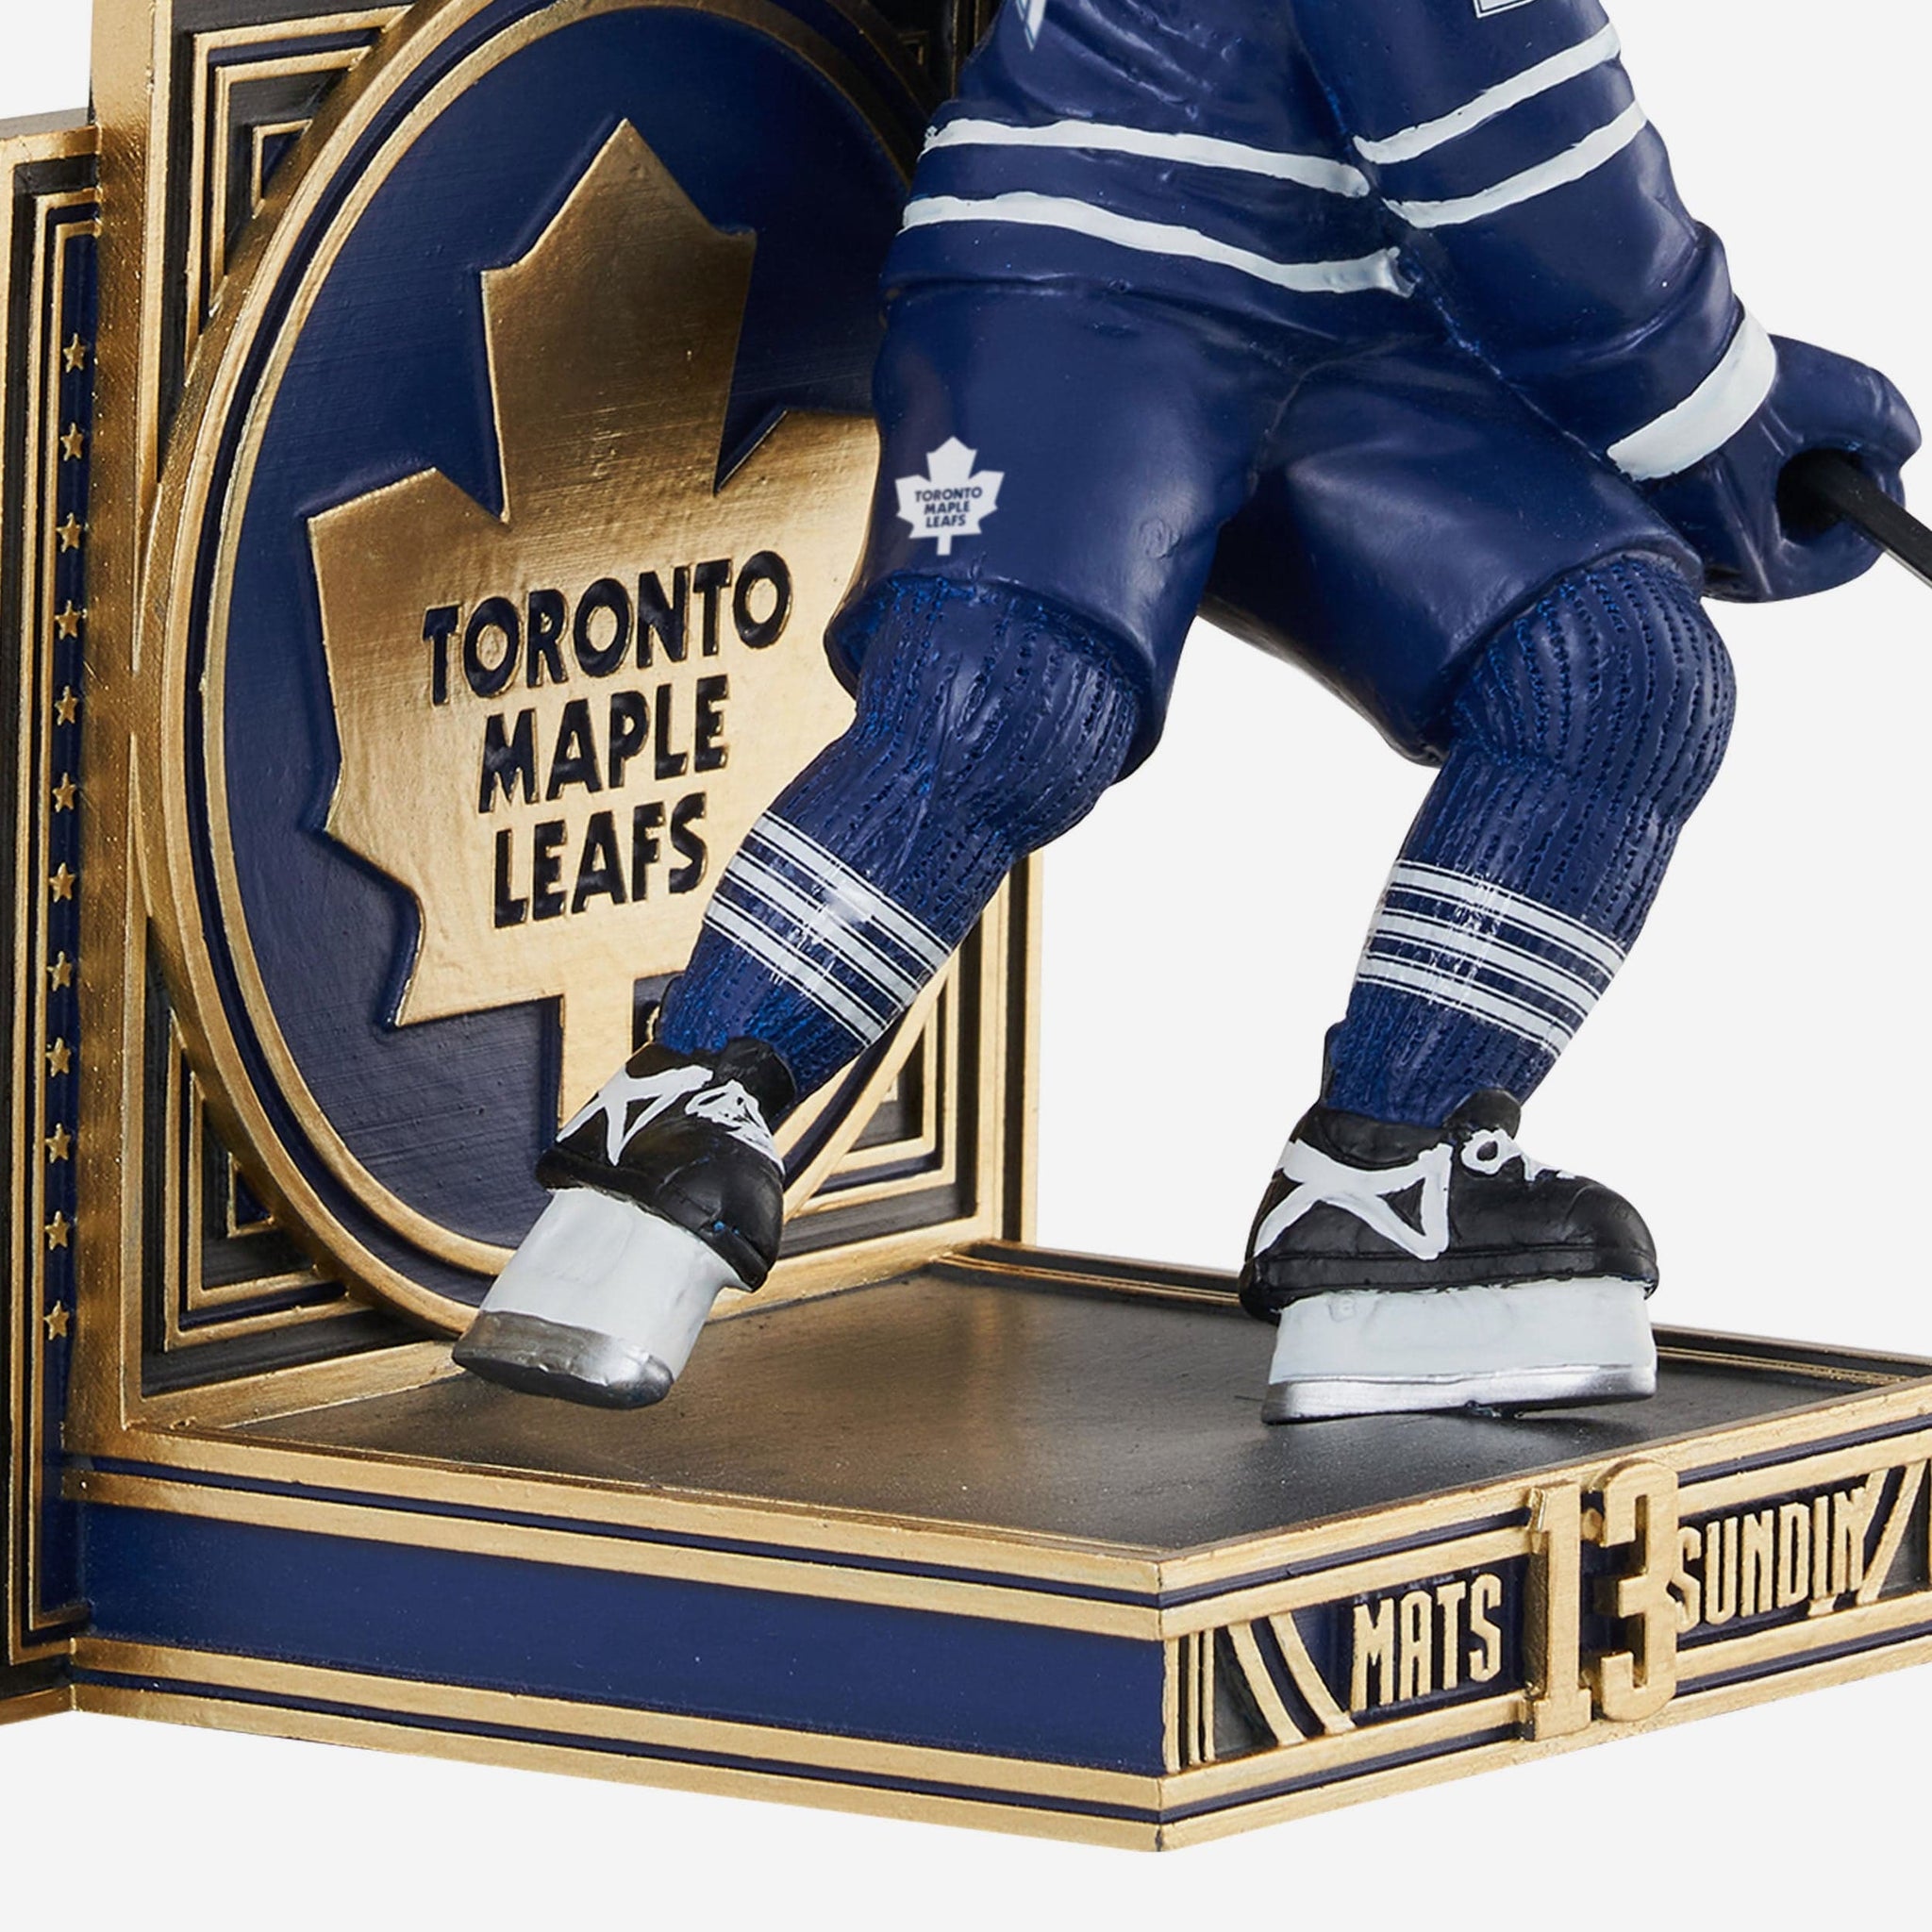 Mats Sundin Jerseys  Mats Sundin Toronto Maple Leafs Jerseys & Gear -  Leafs Store